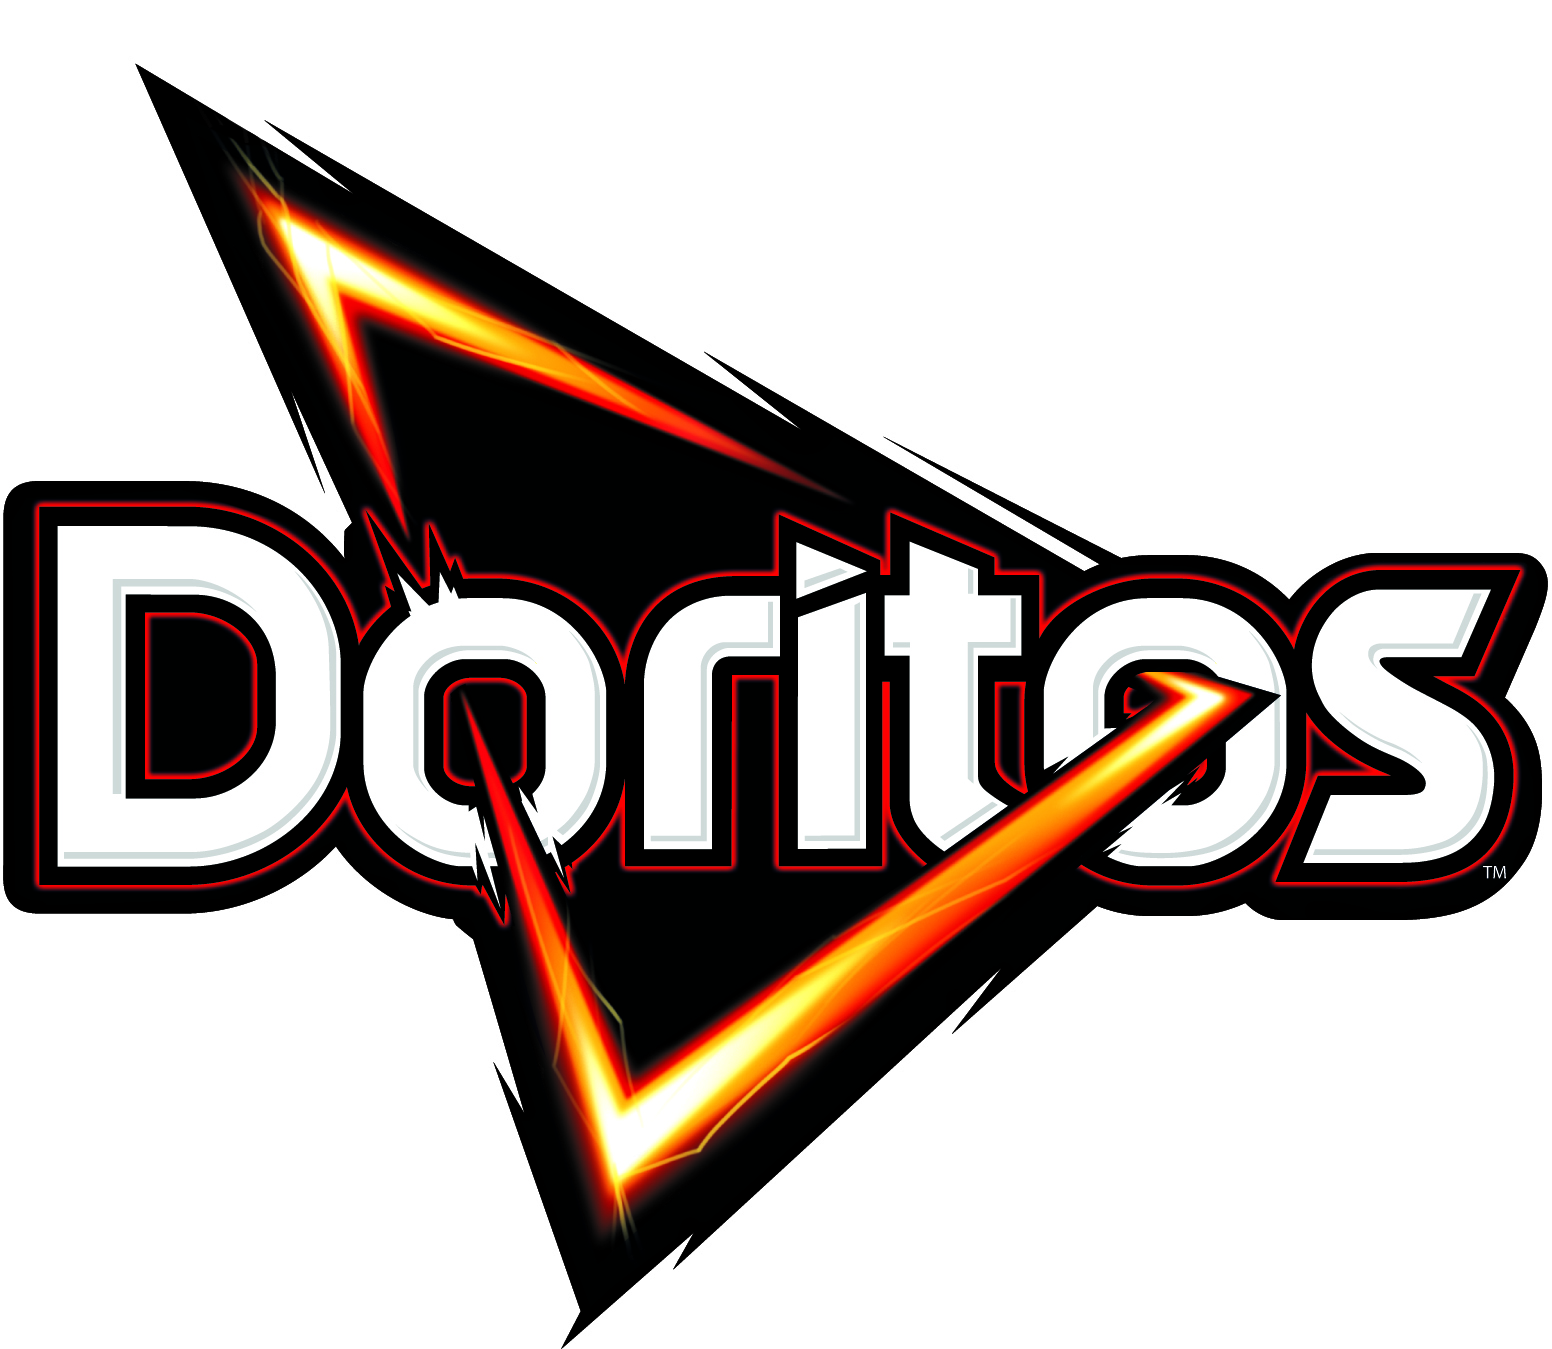 New_Doritos_Logo.png